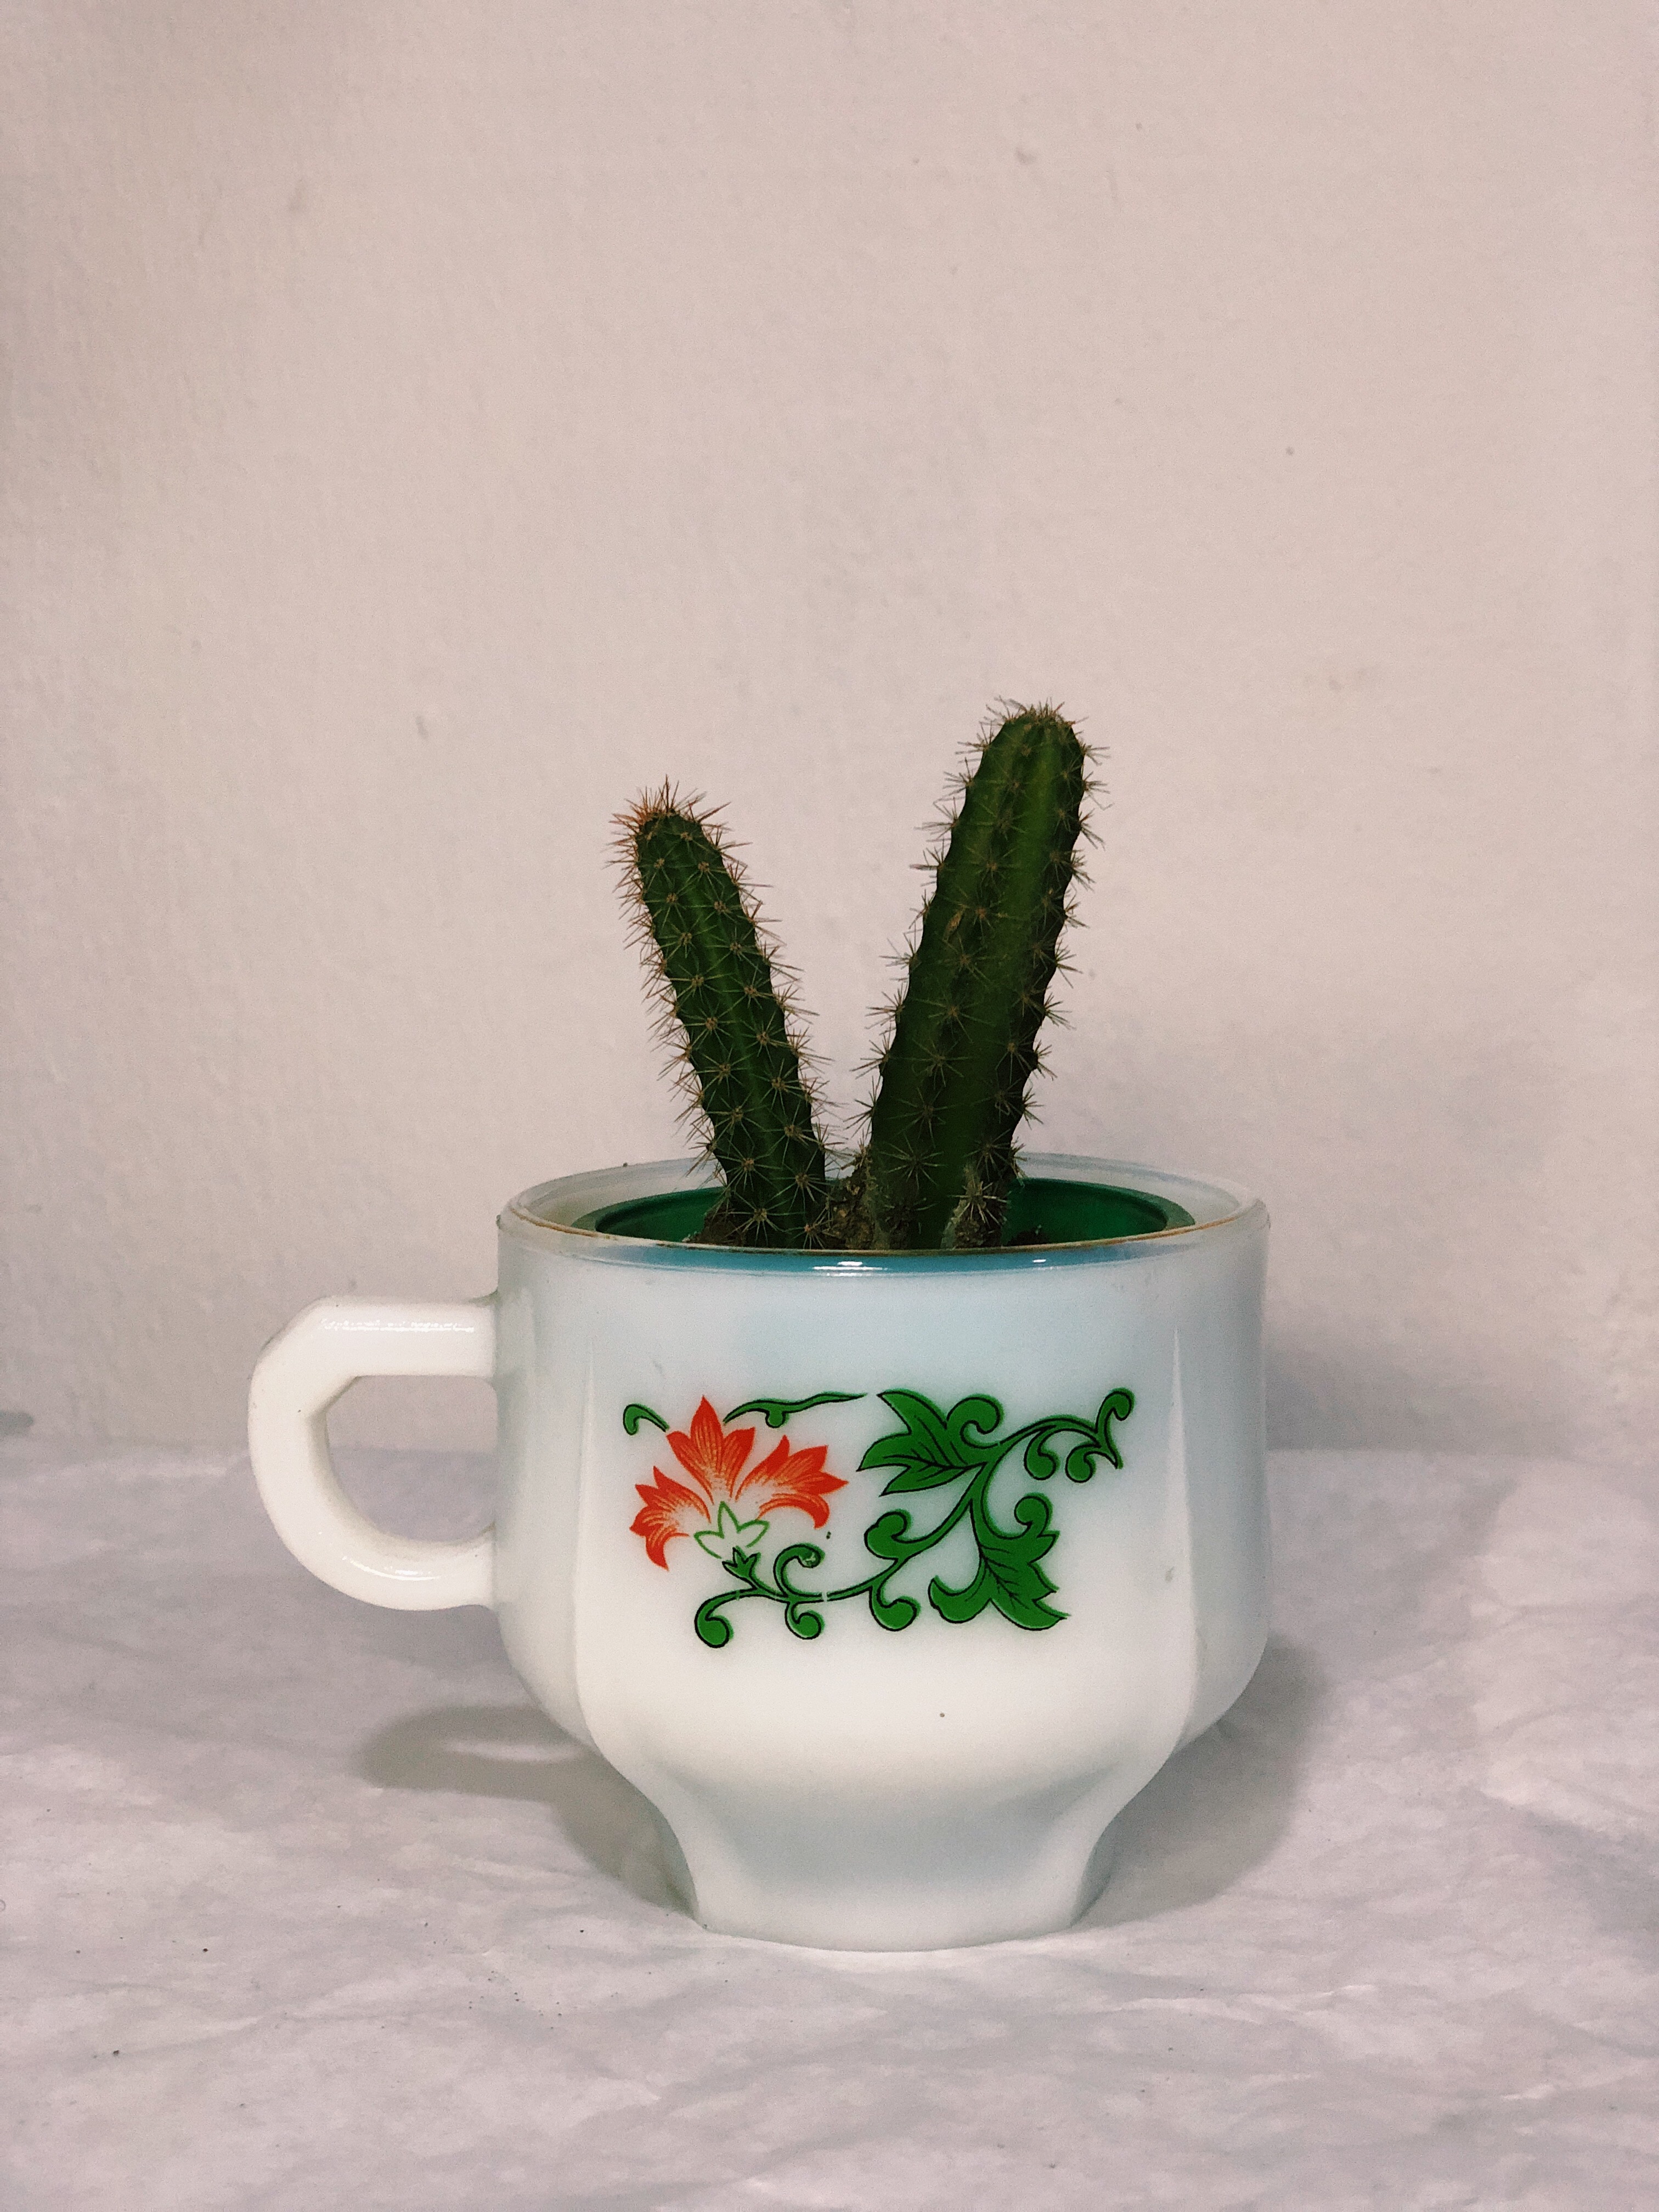 Cactus in a teacup